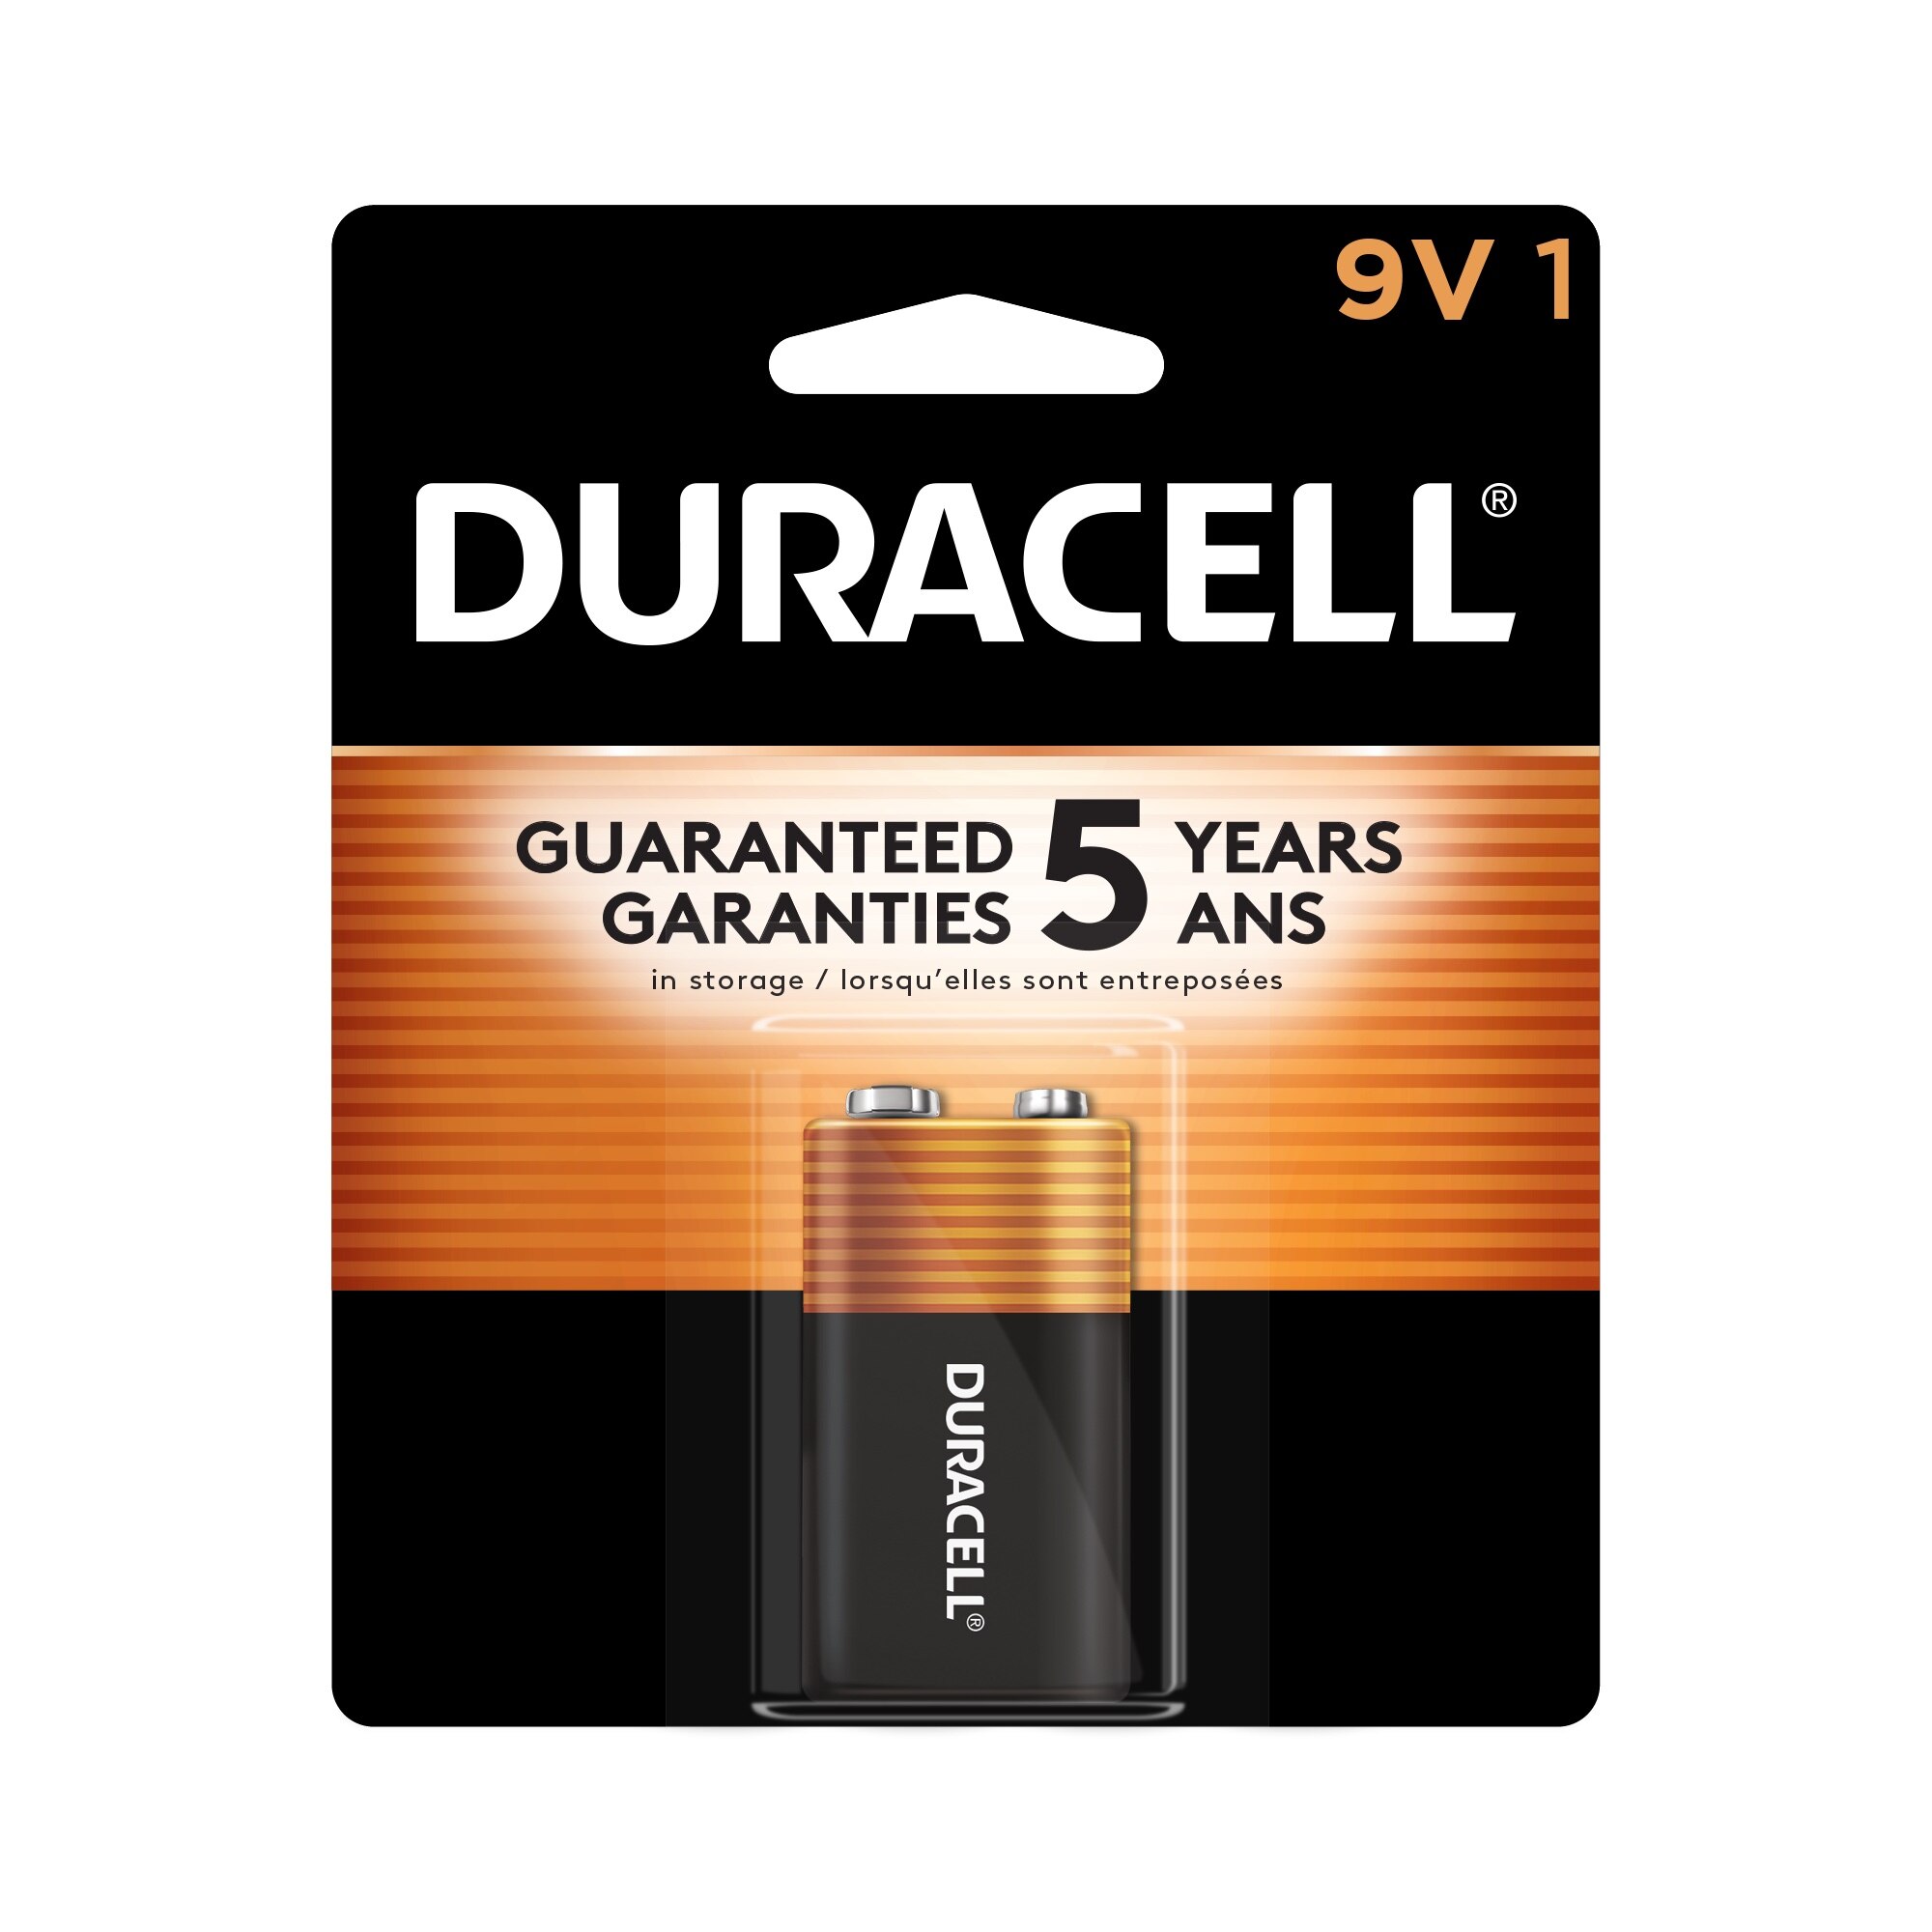 Duracell Coppertop 9V Alkaline Batteries